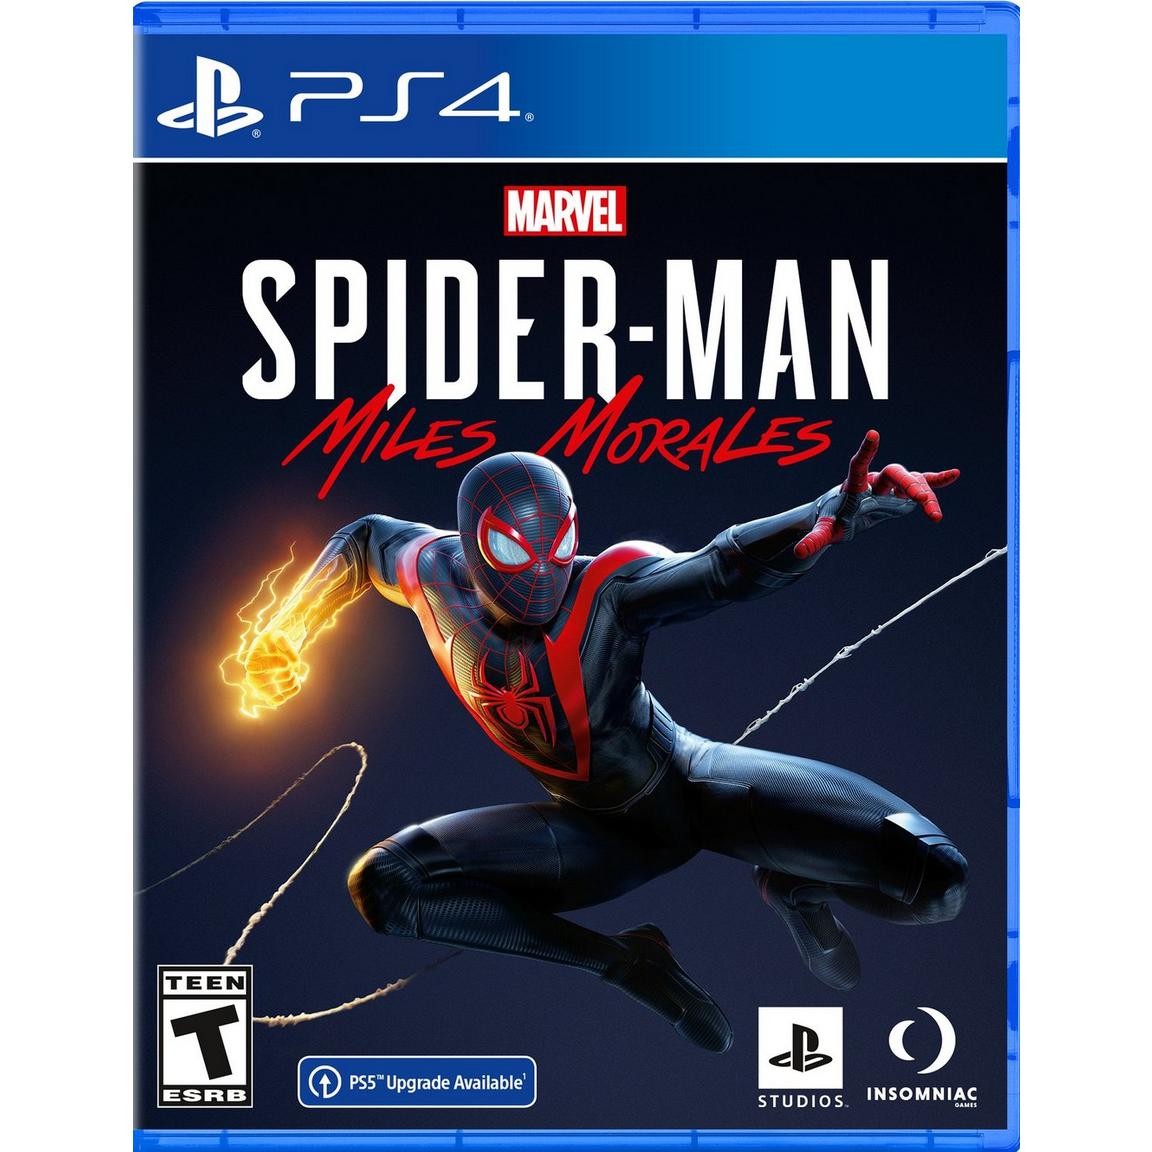 Marvelâ€™s Spiderman: Miles Morales (PS4